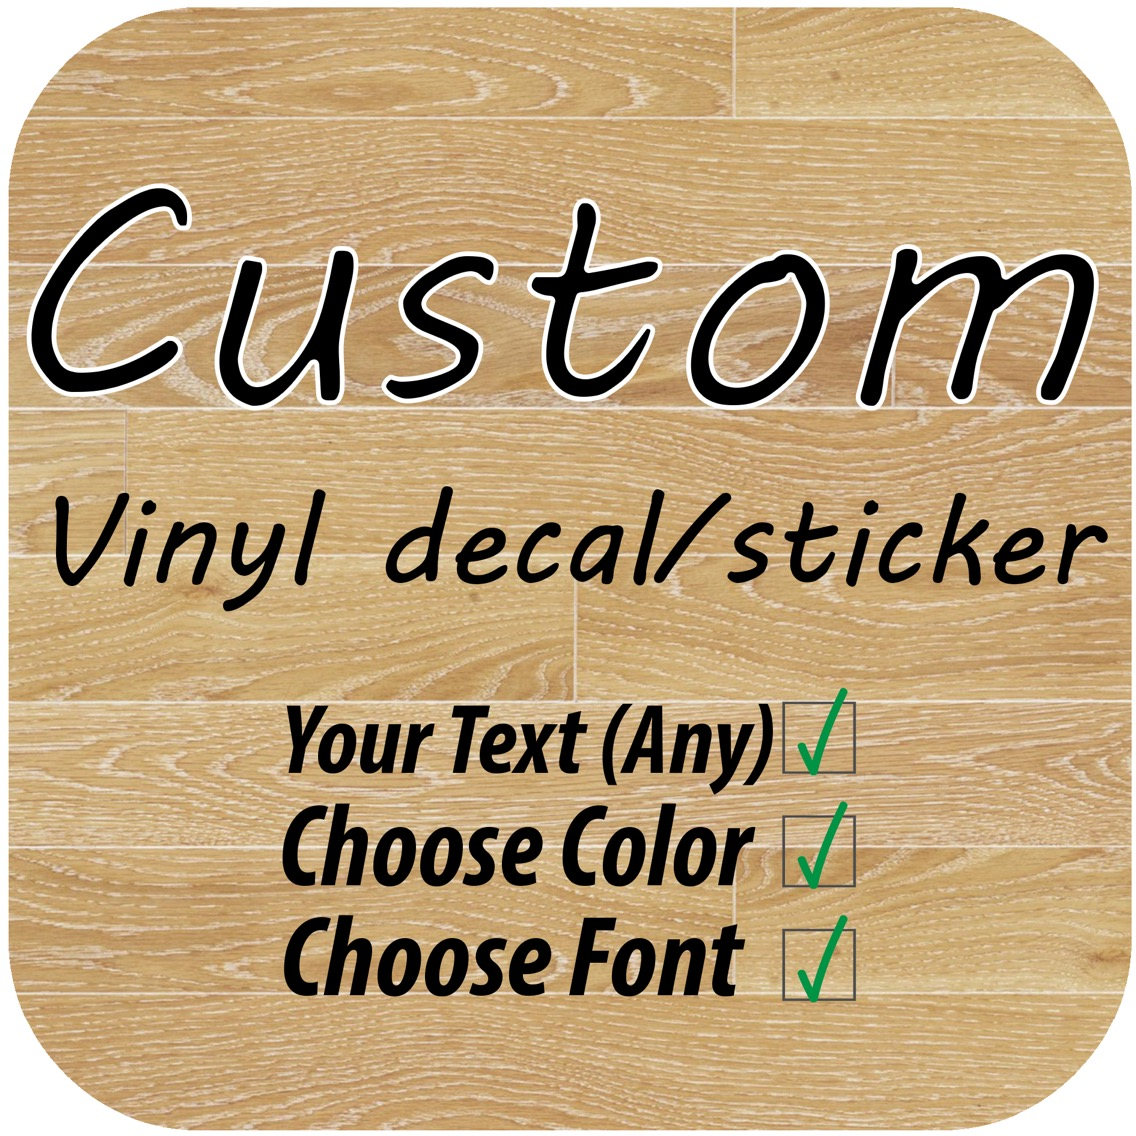 custom-vinyl-decal-sticker-create-your-own-decal-custom-etsy